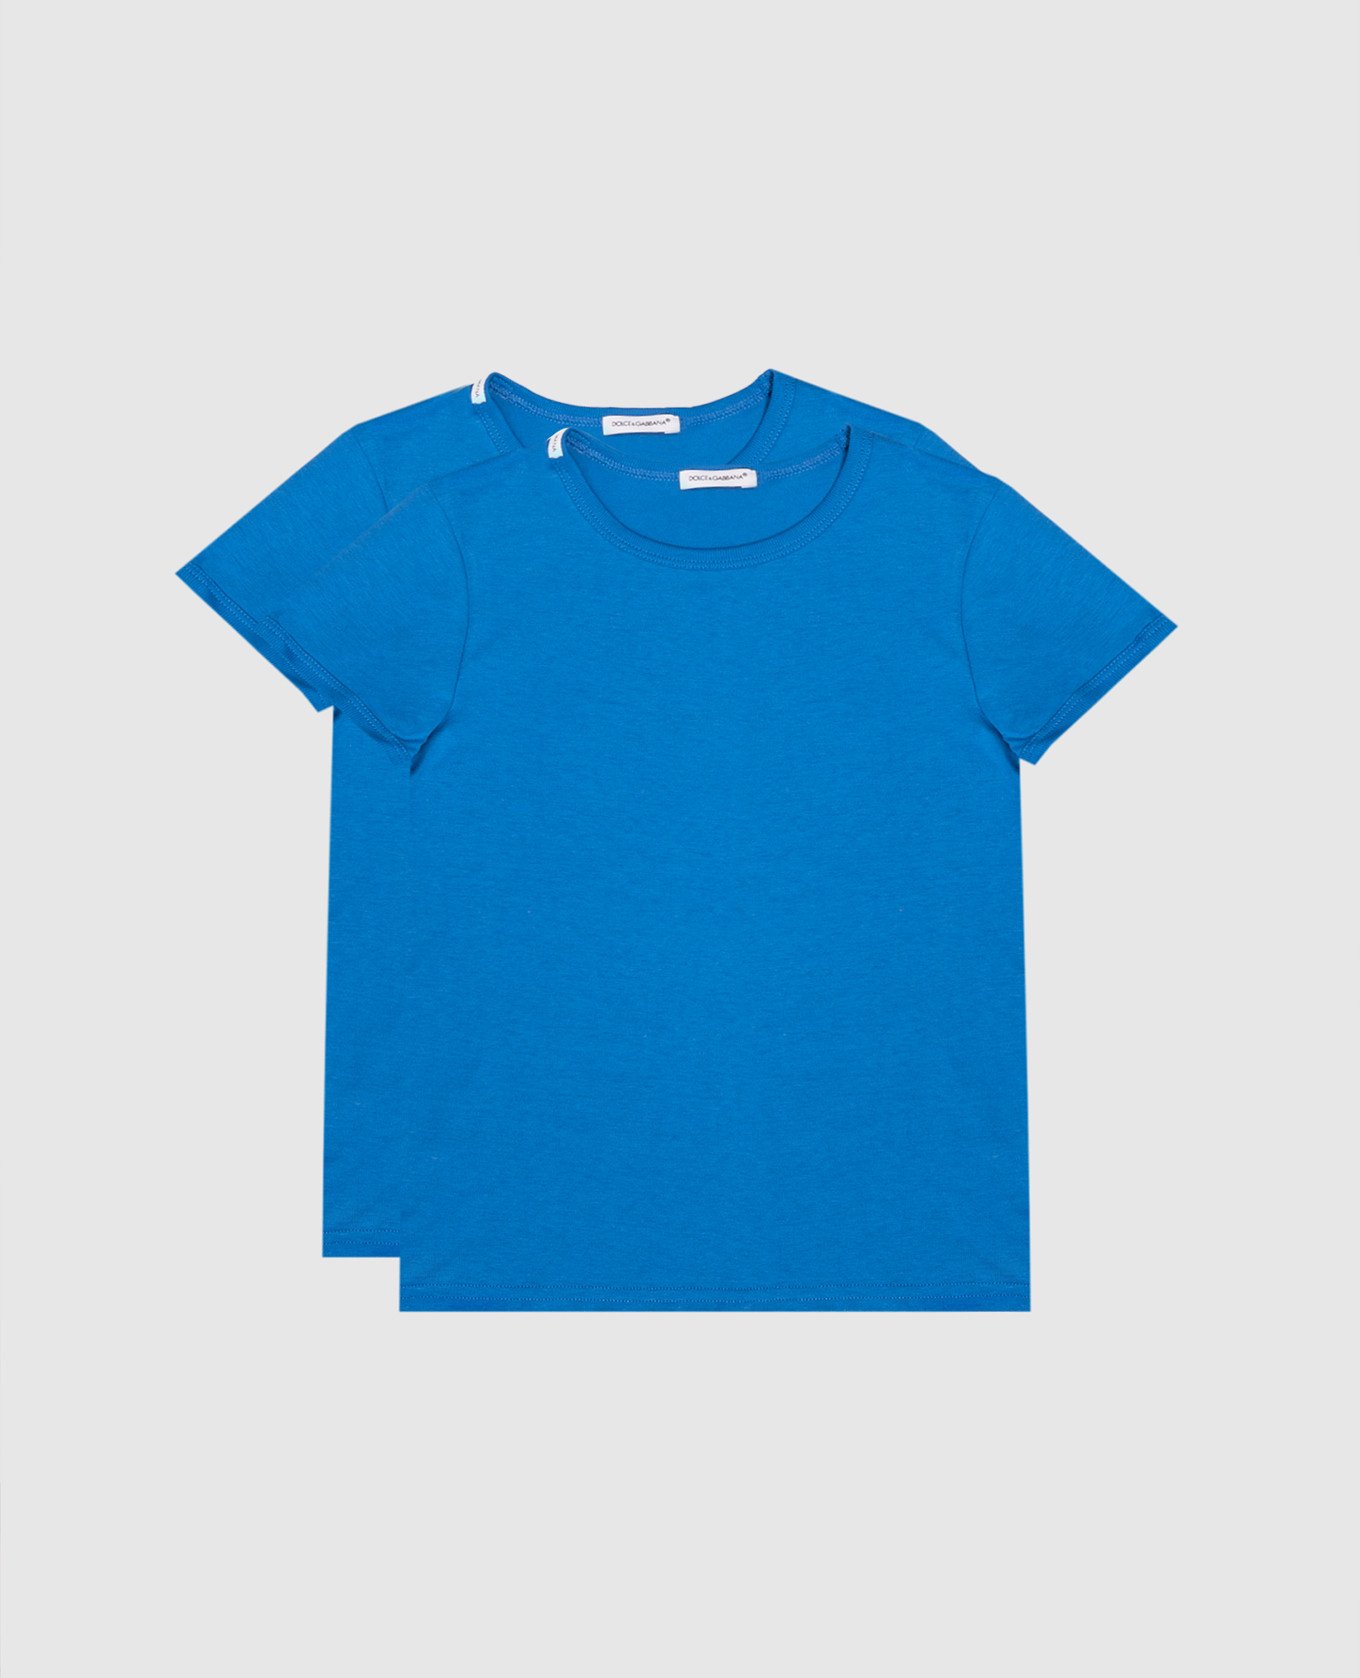 Children's set of blue t-shirts